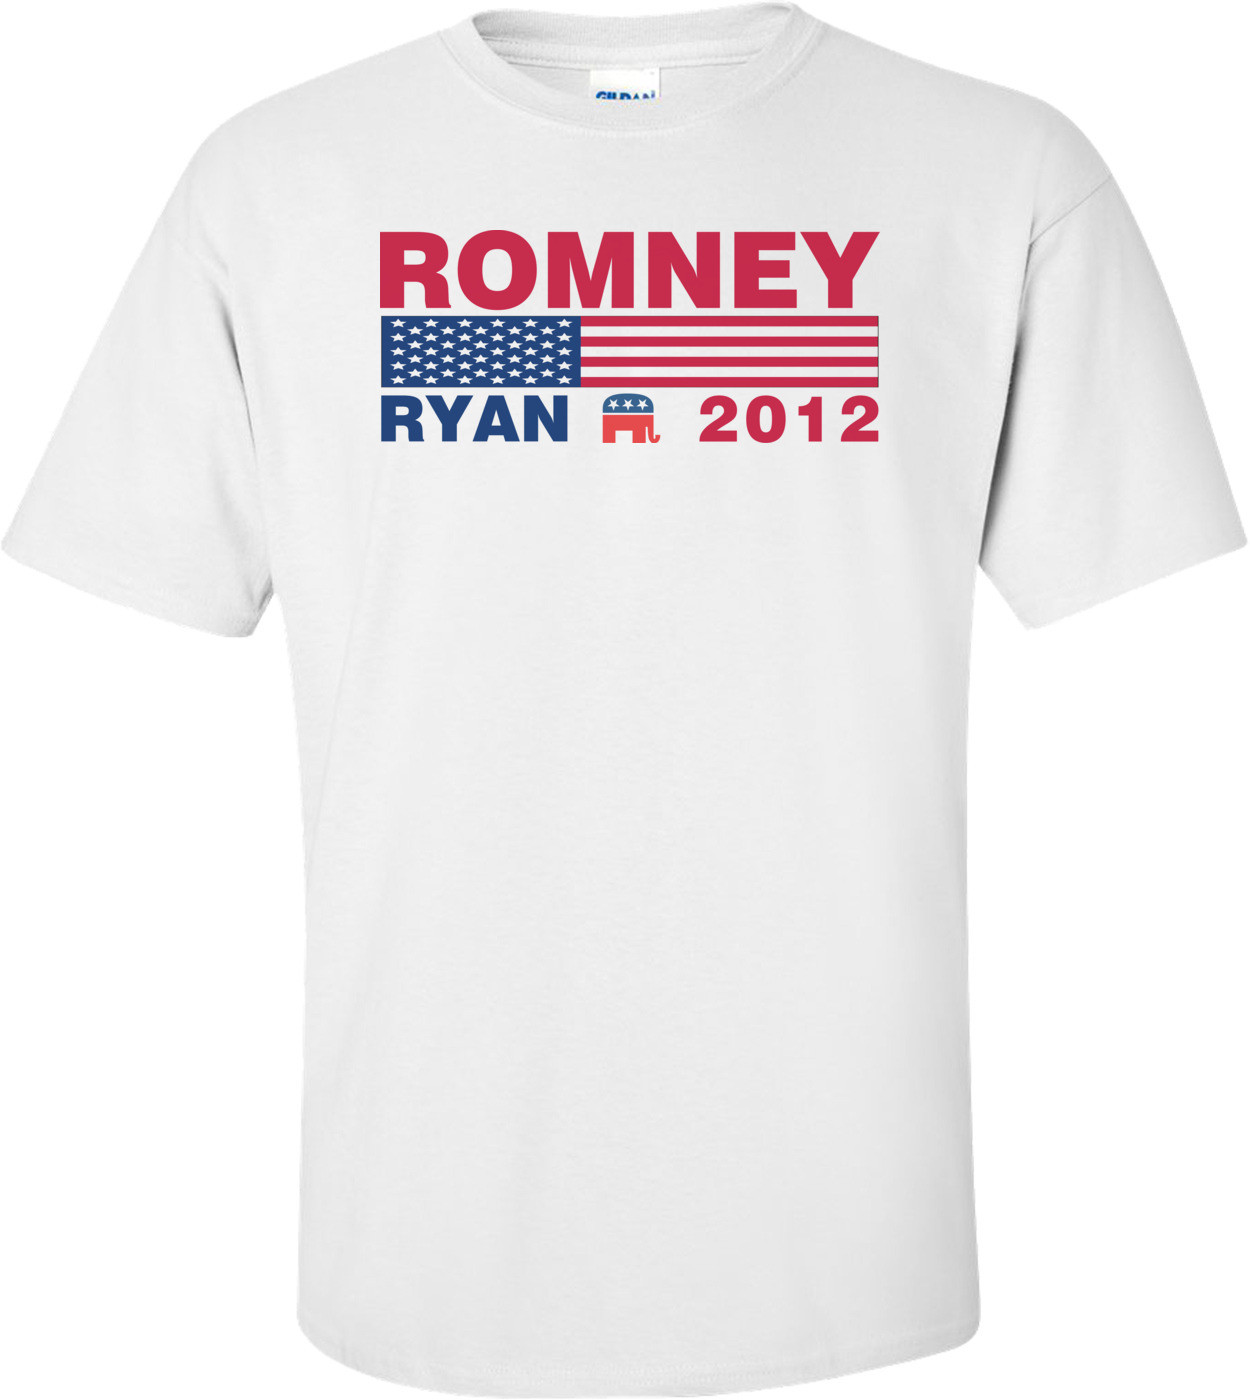 Romney Ryan 2012 T-shirt